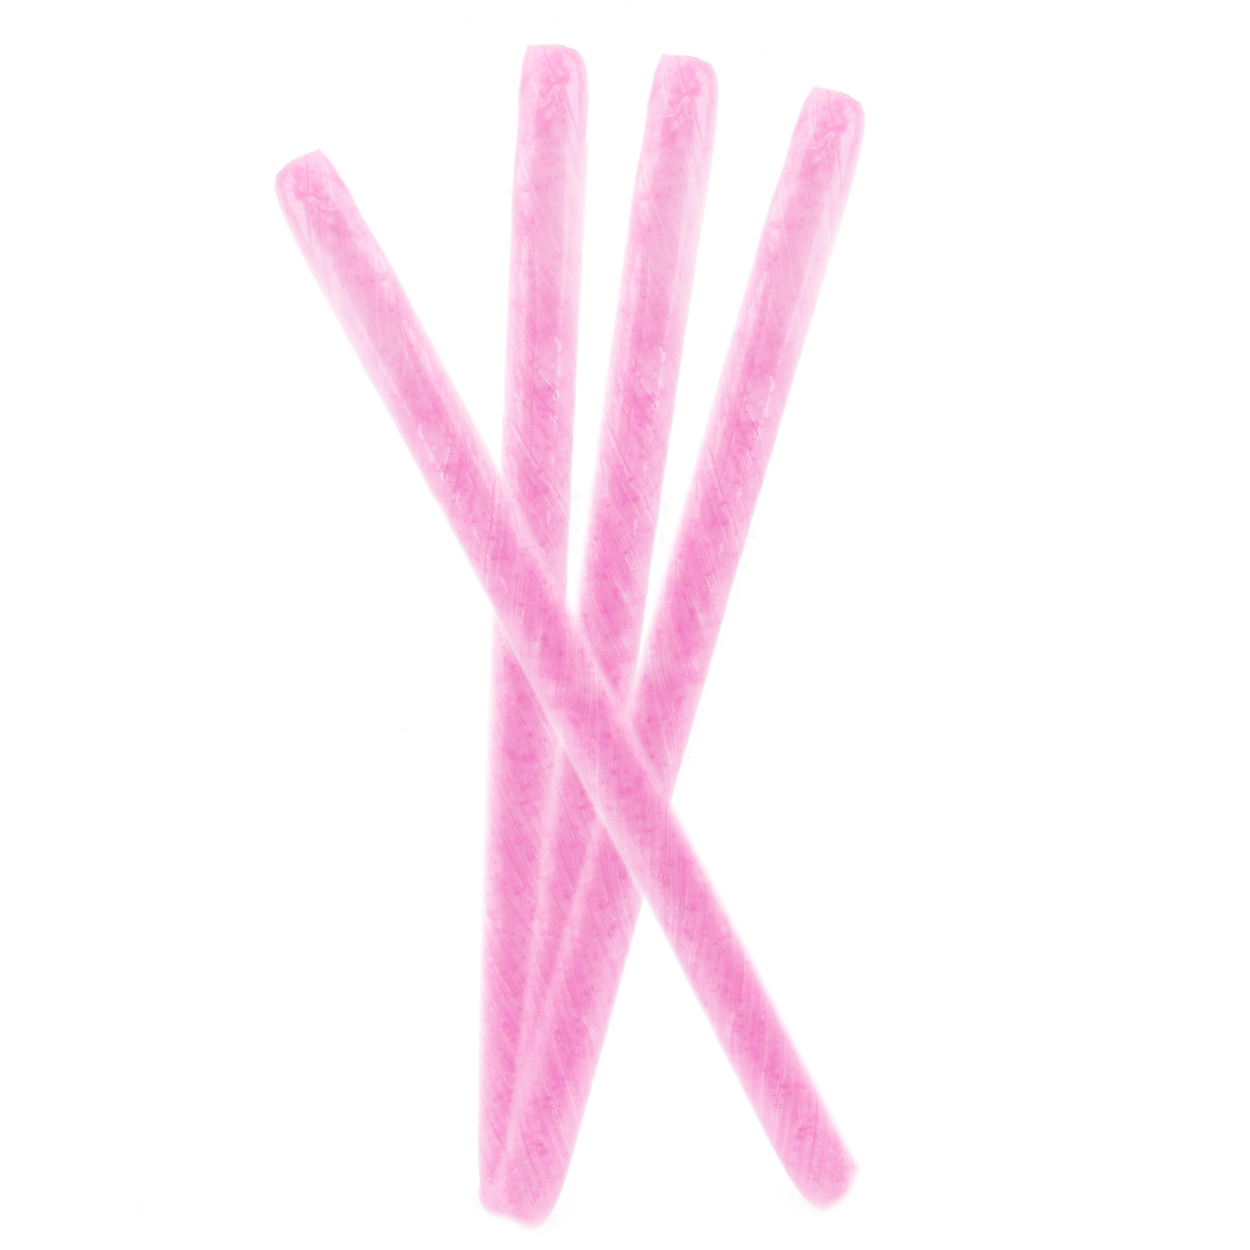 Buy Pink Candy Cane Stripes Stirring Straws, Bulk Sizes